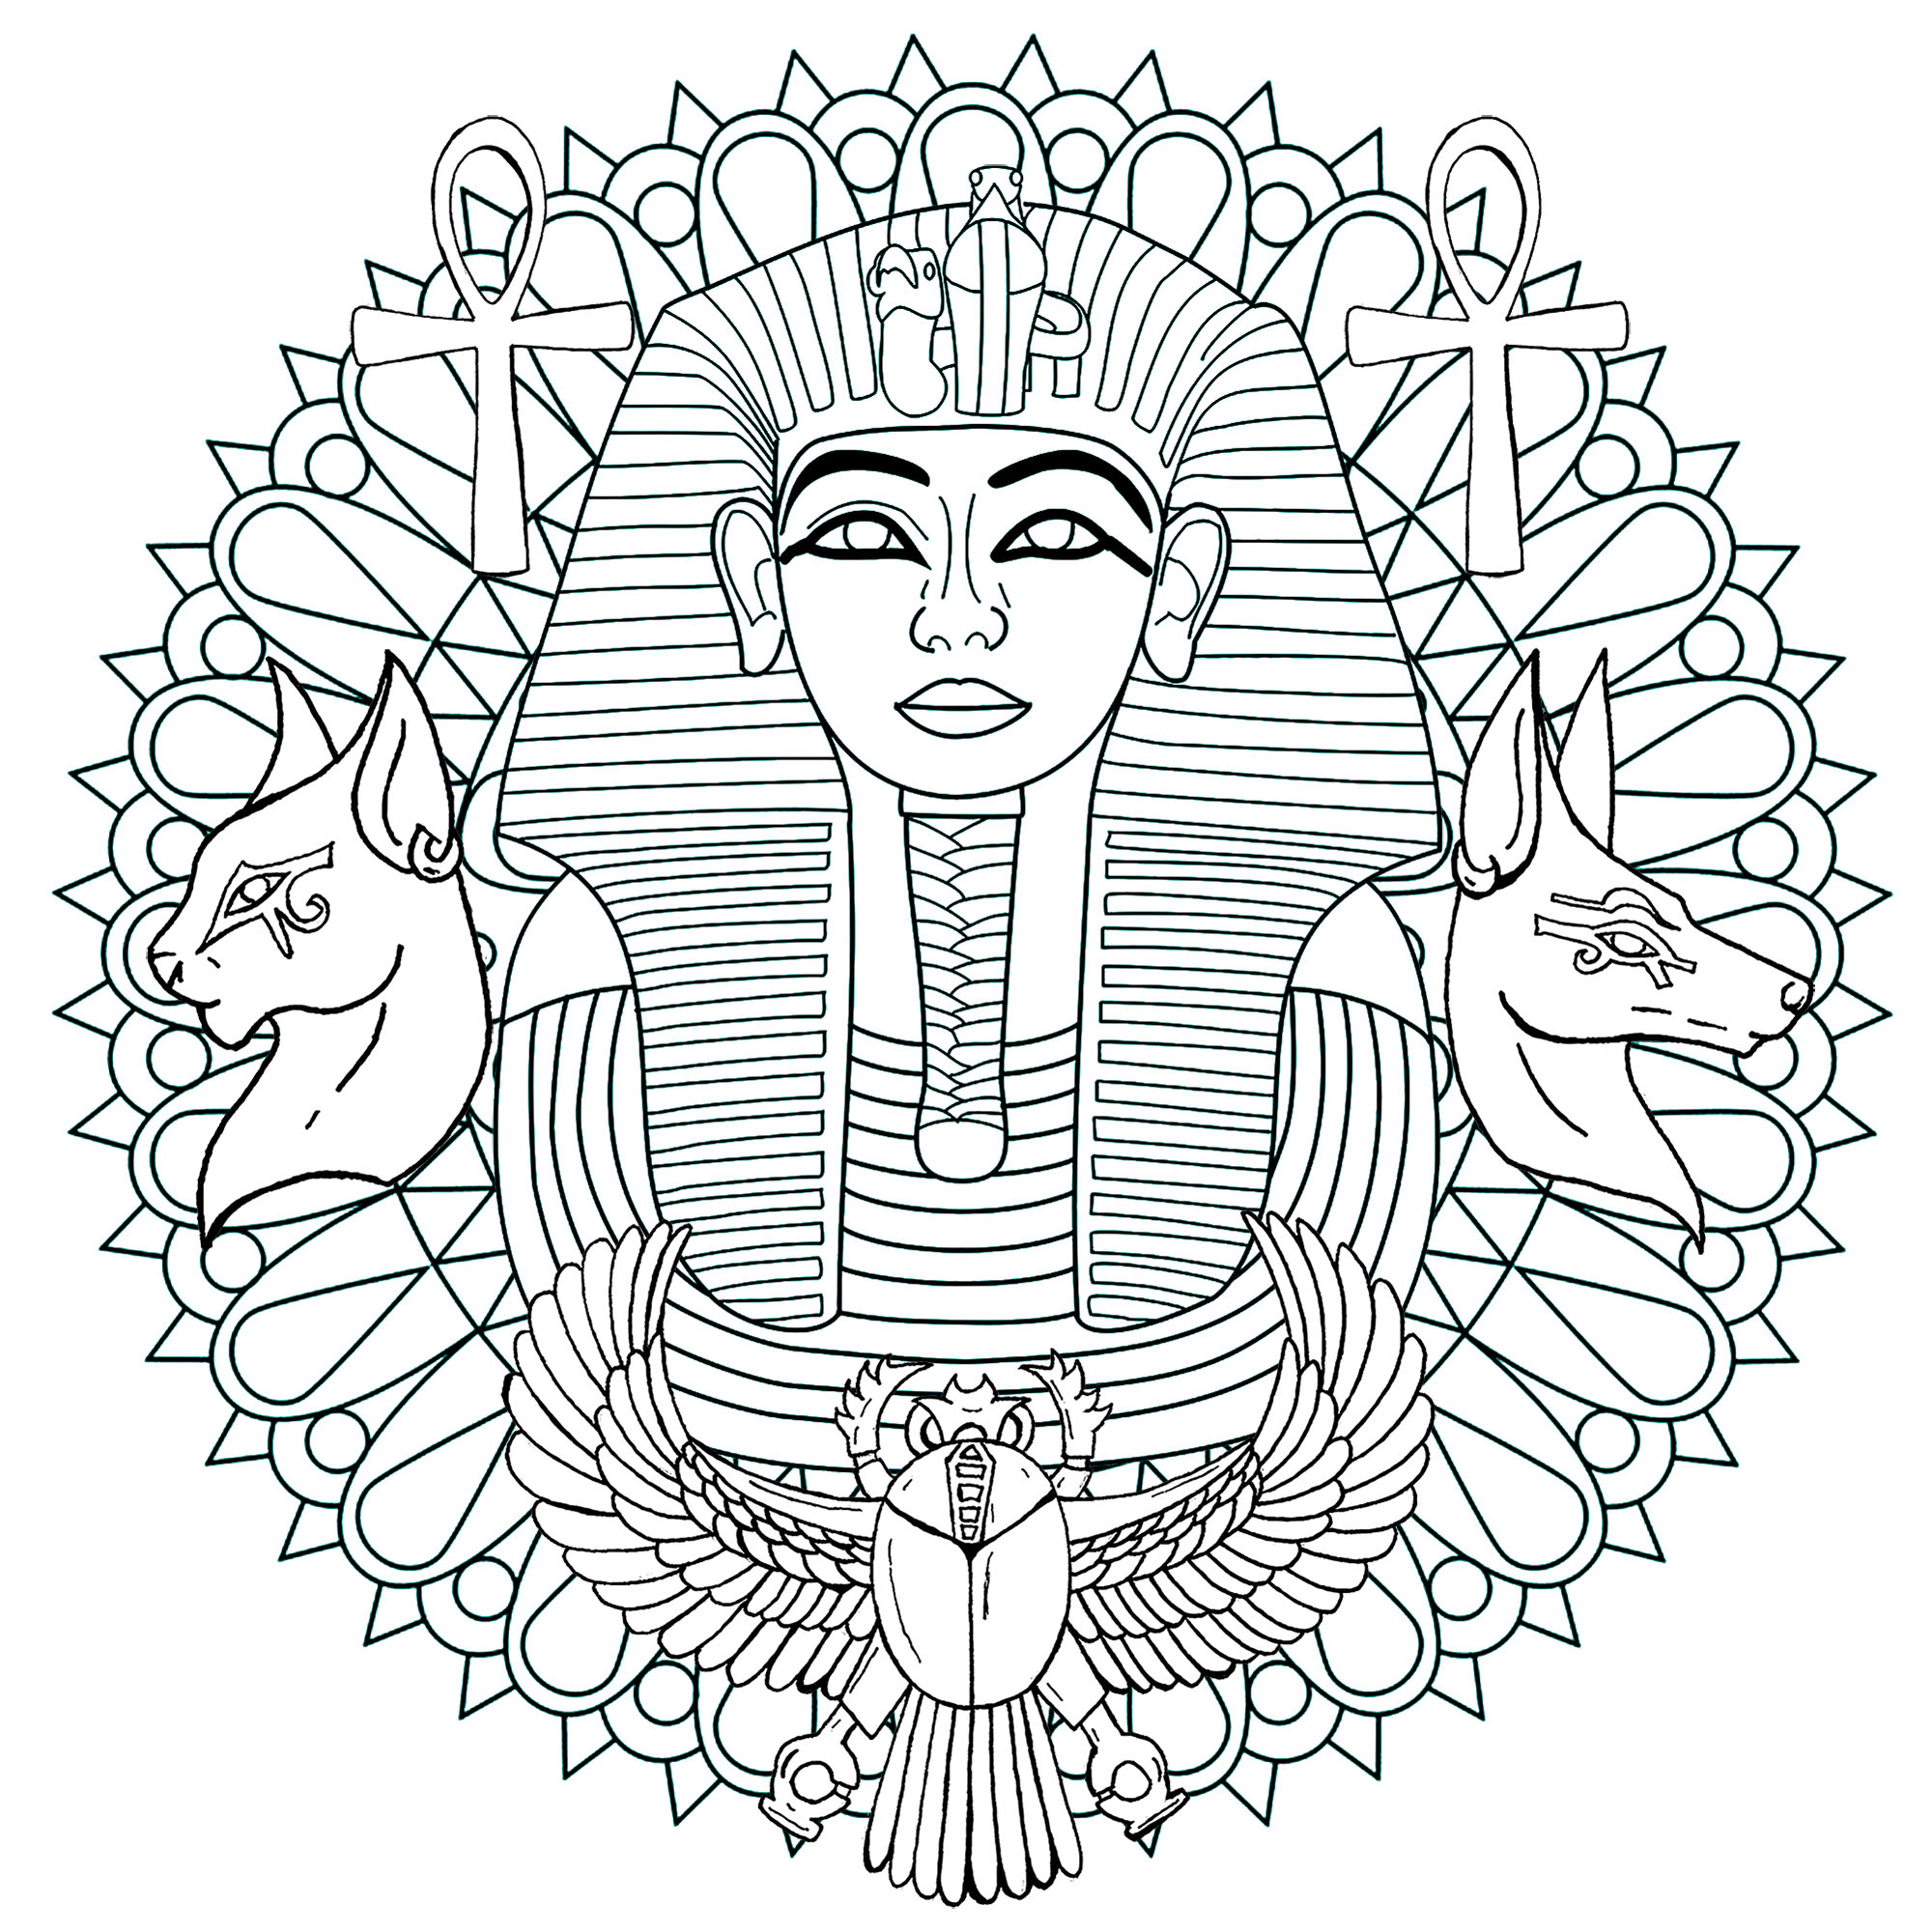 The Tutankhamun Mandala   First version